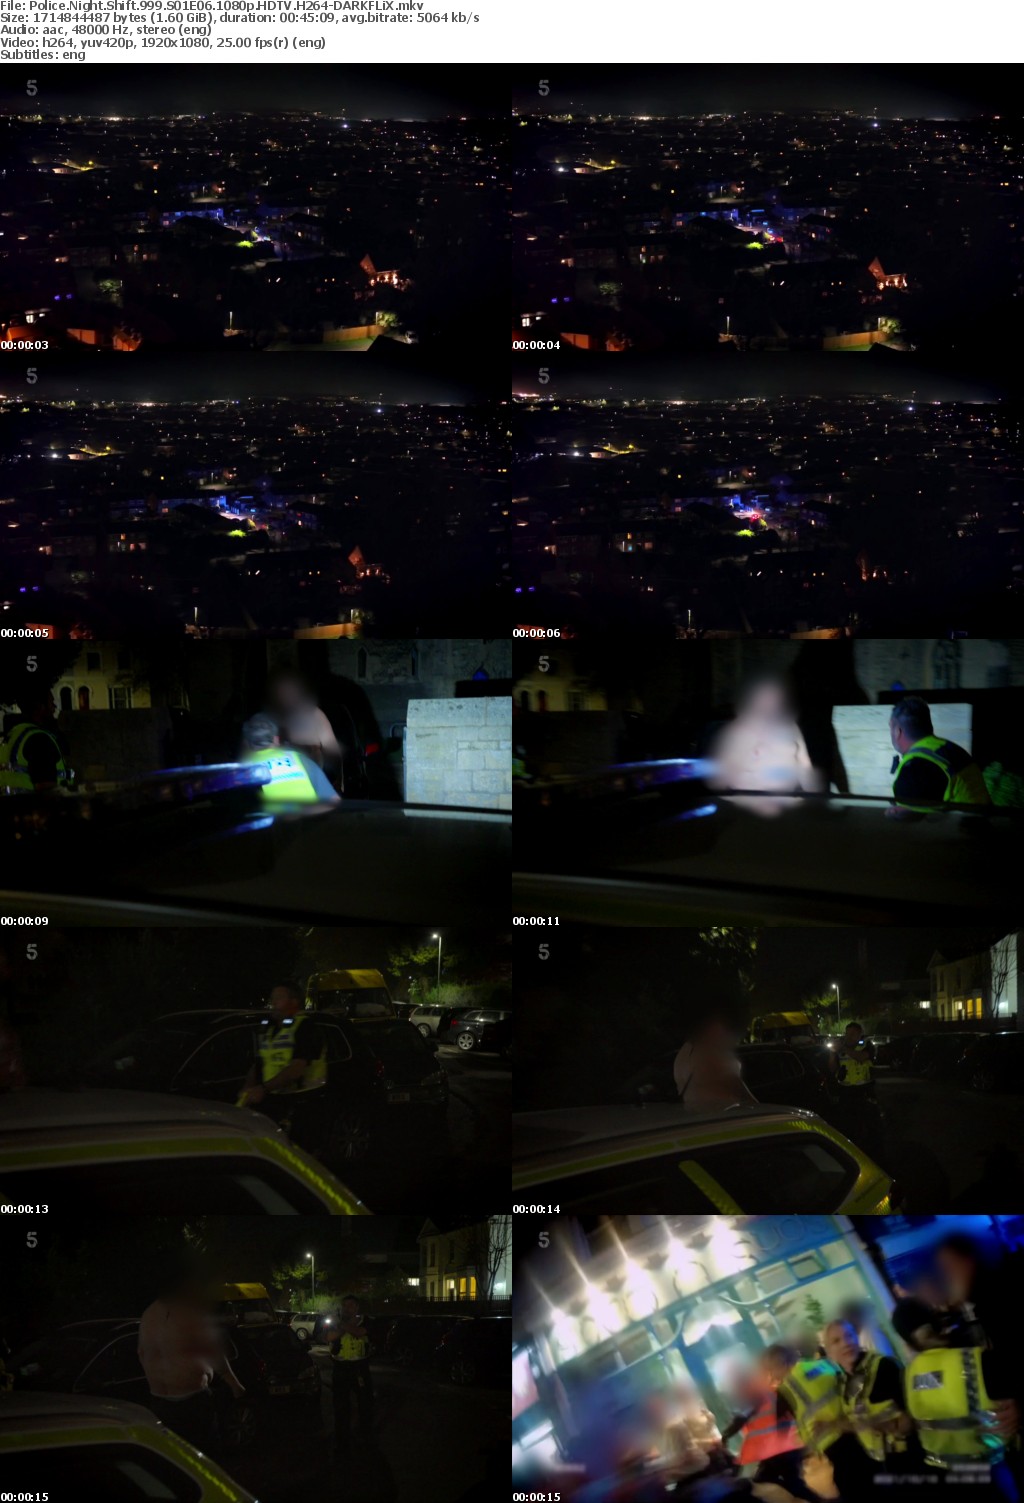 Police Night Shift 999 S01E06 1080p HDTV H264-DARKFLiX